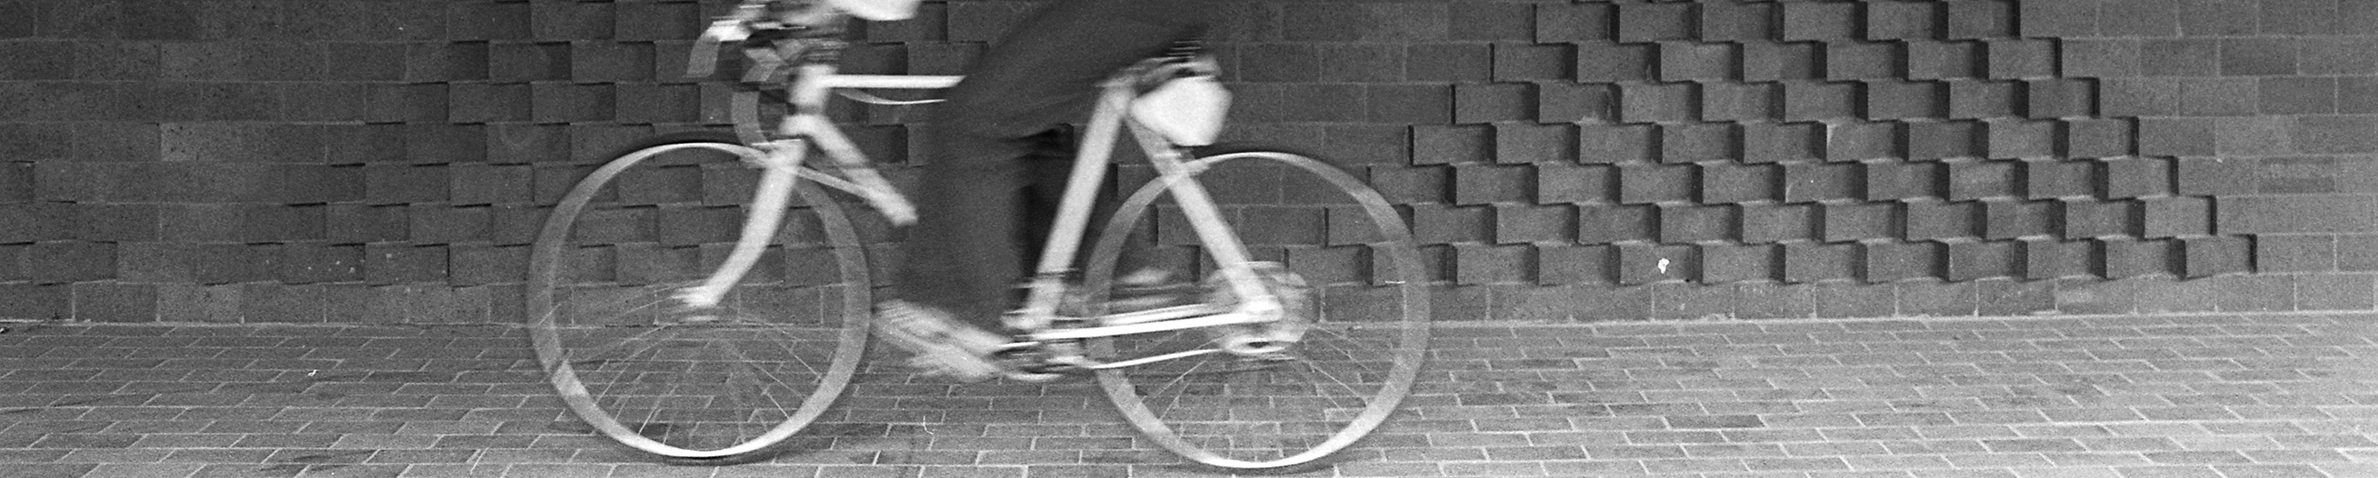 person on bike, Loggia wall